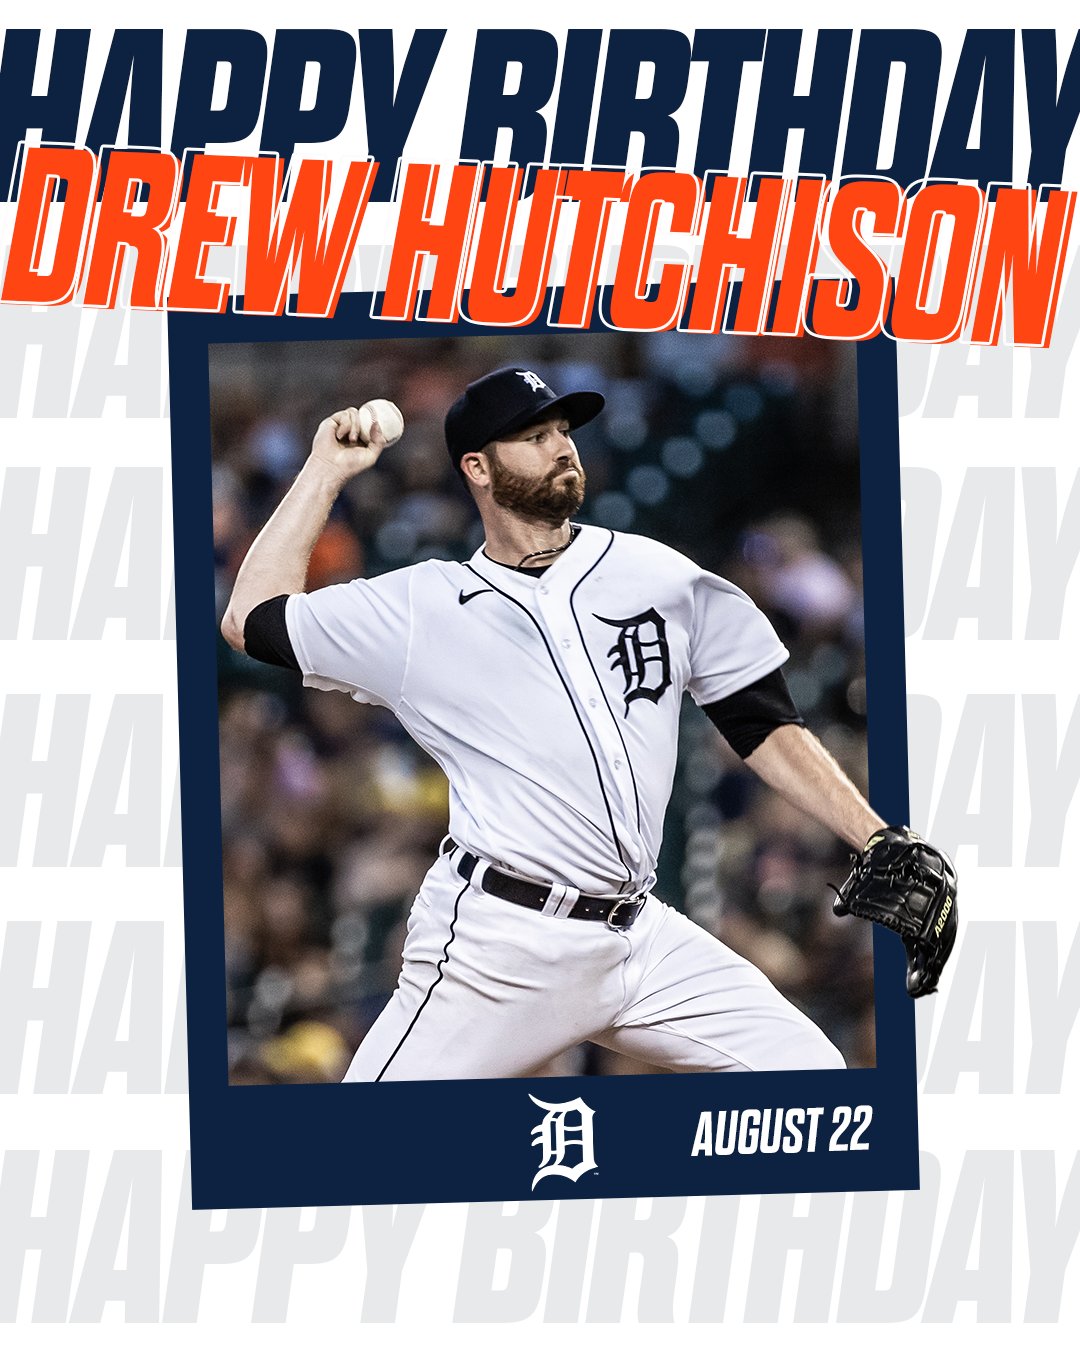 Detroit Tigers on X: Help us wish Drew Hutchison a happy birthday